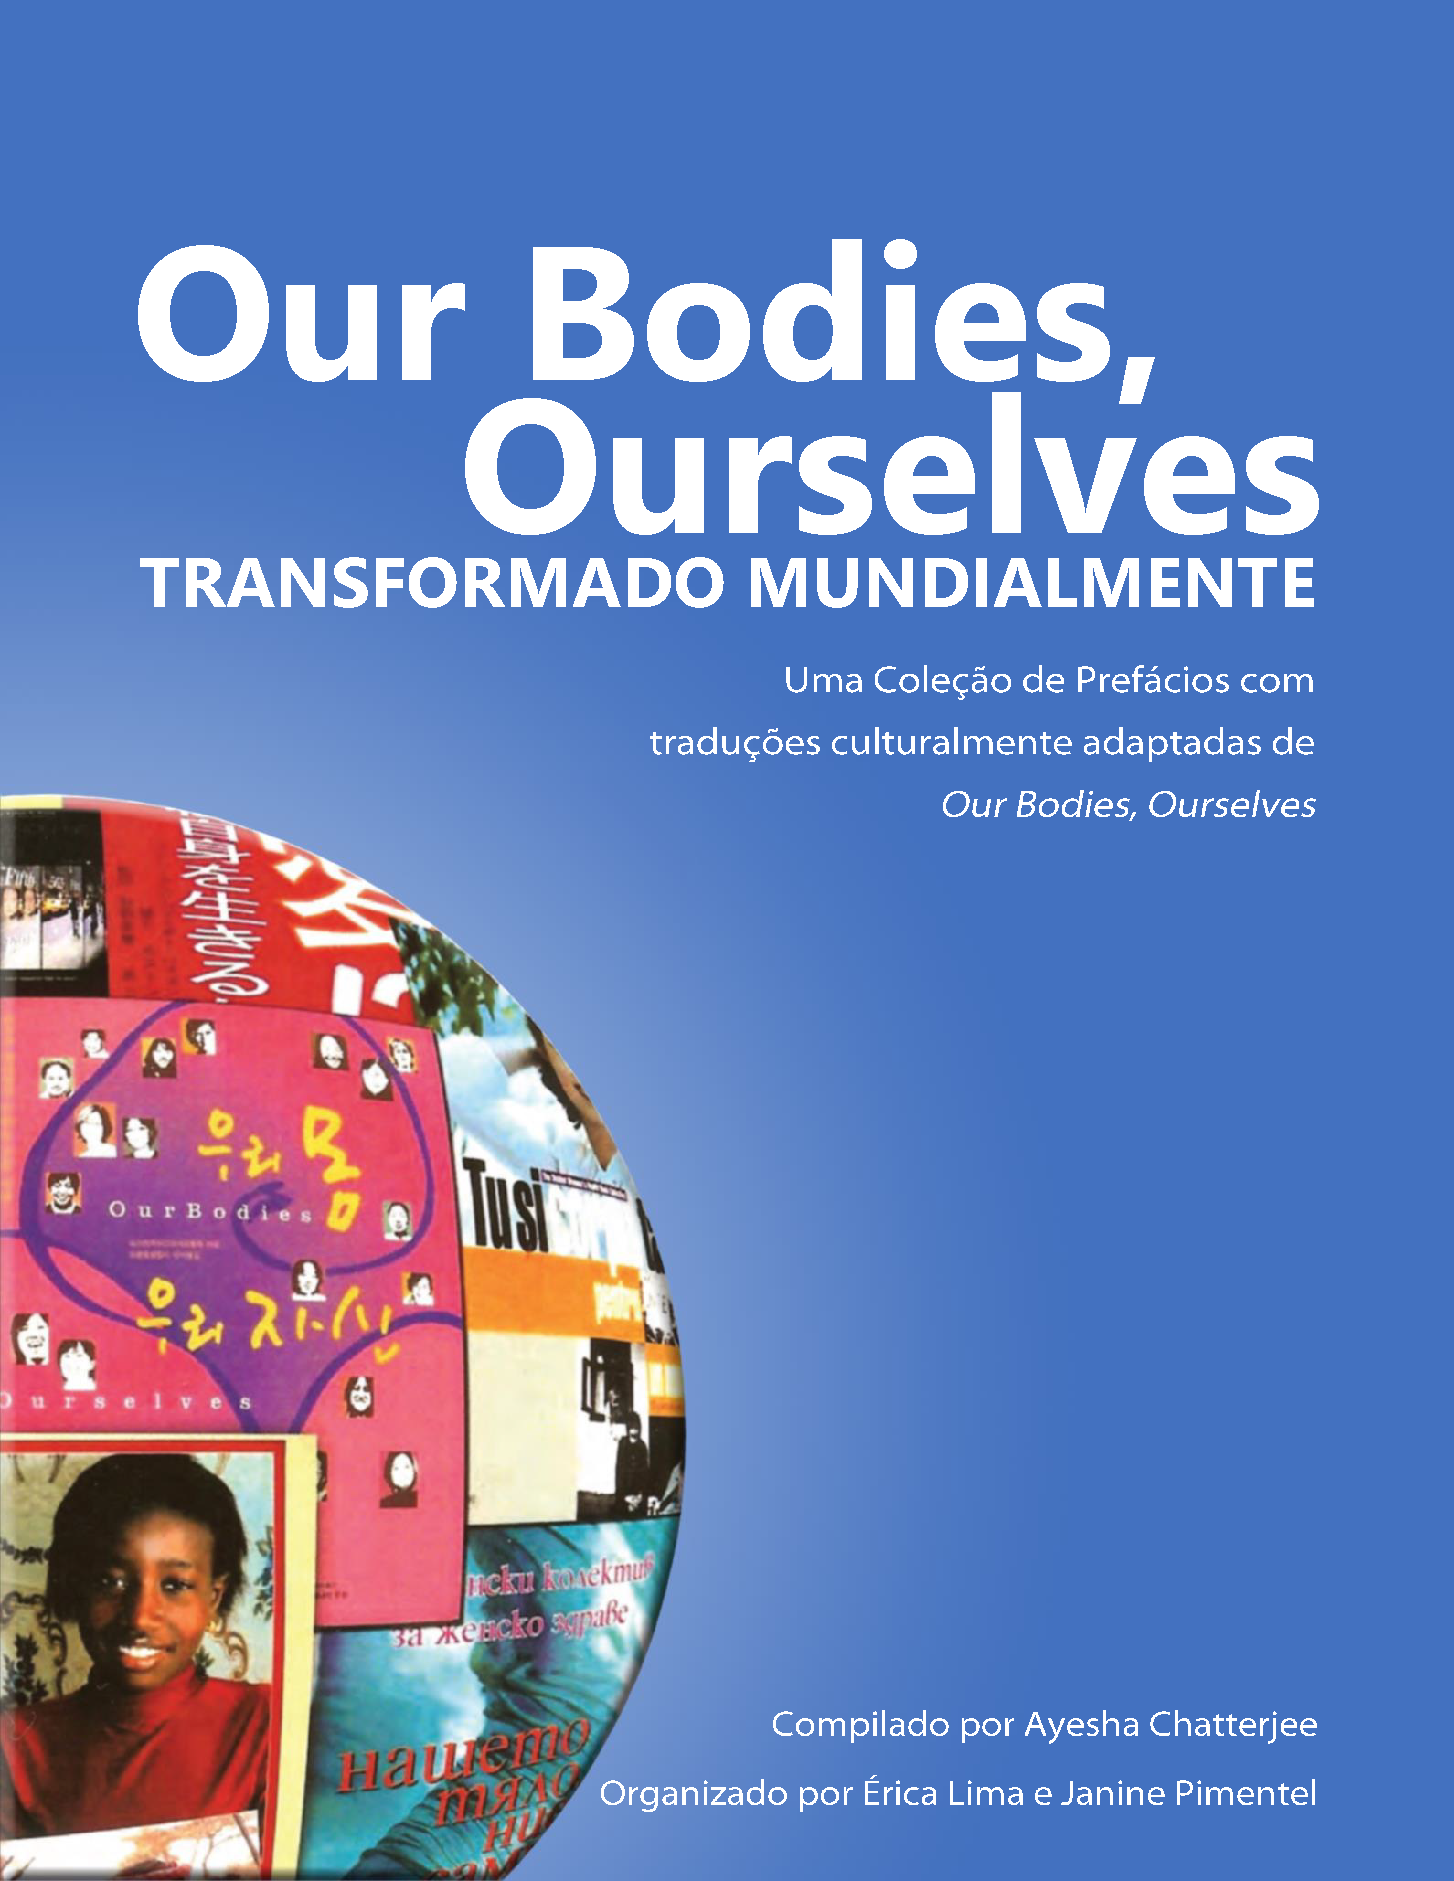 Our bodies, ourselves transformado mundialmente